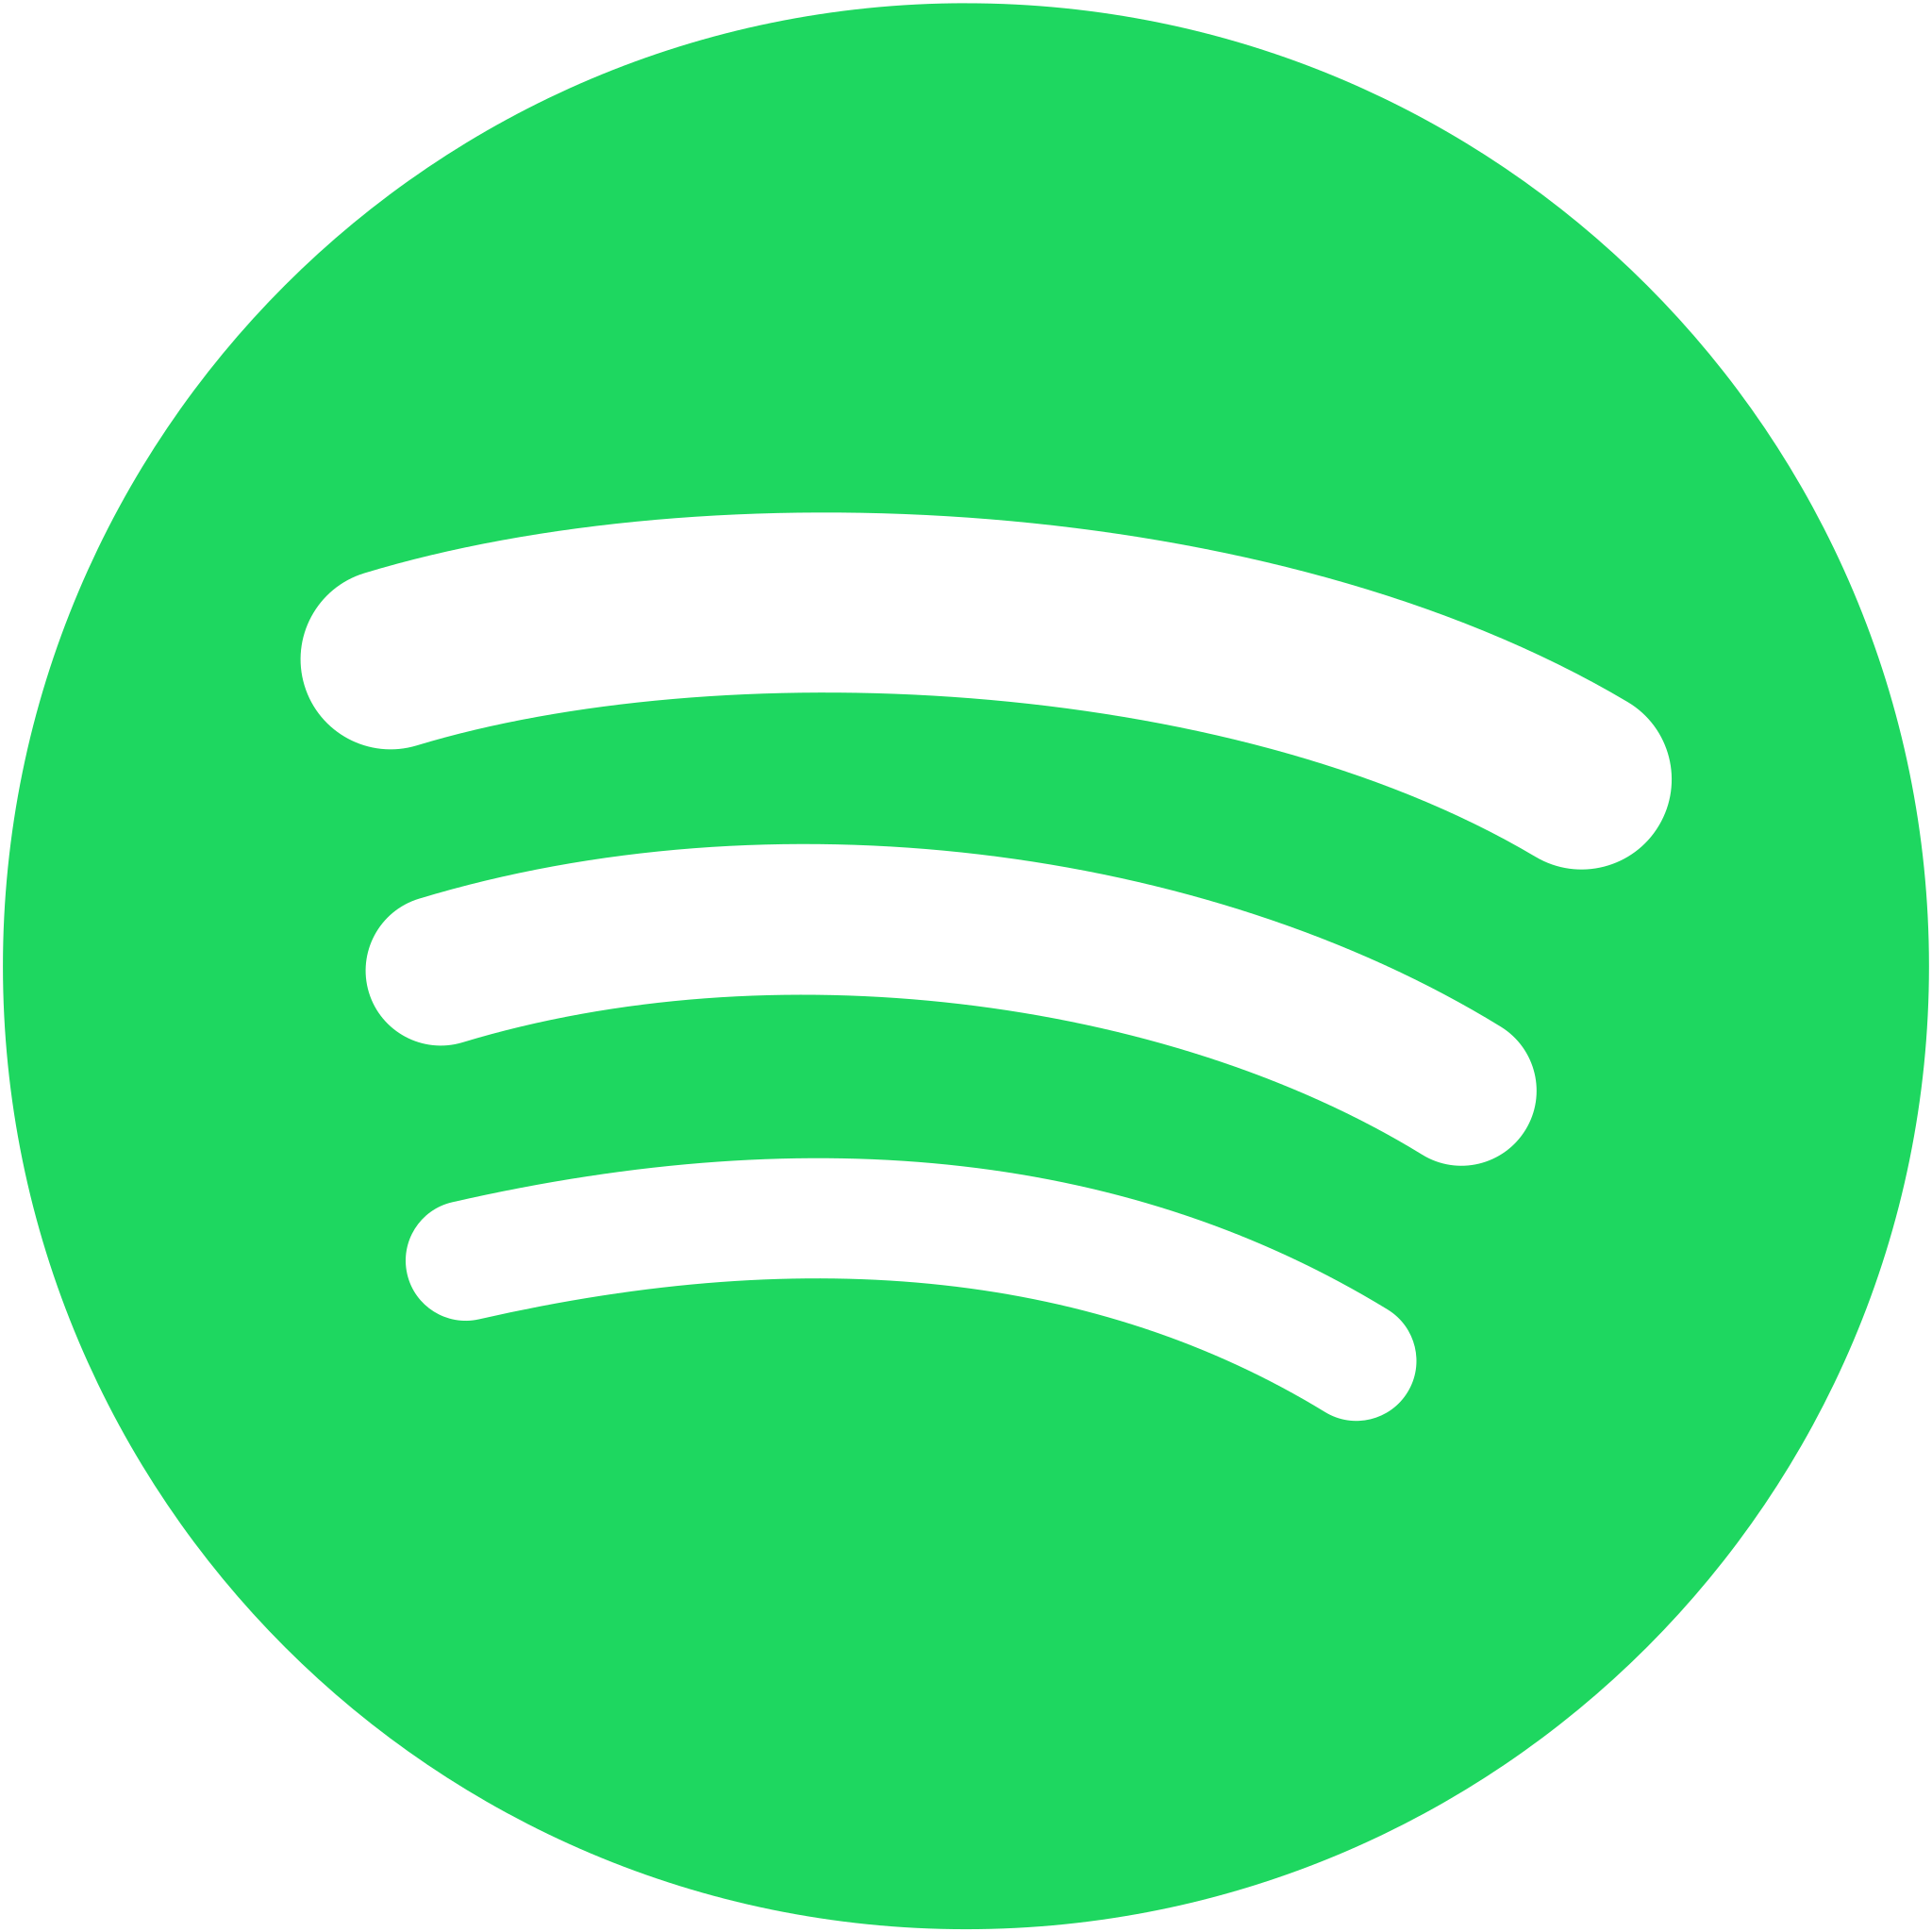 Spotify_logo_without_text.svg